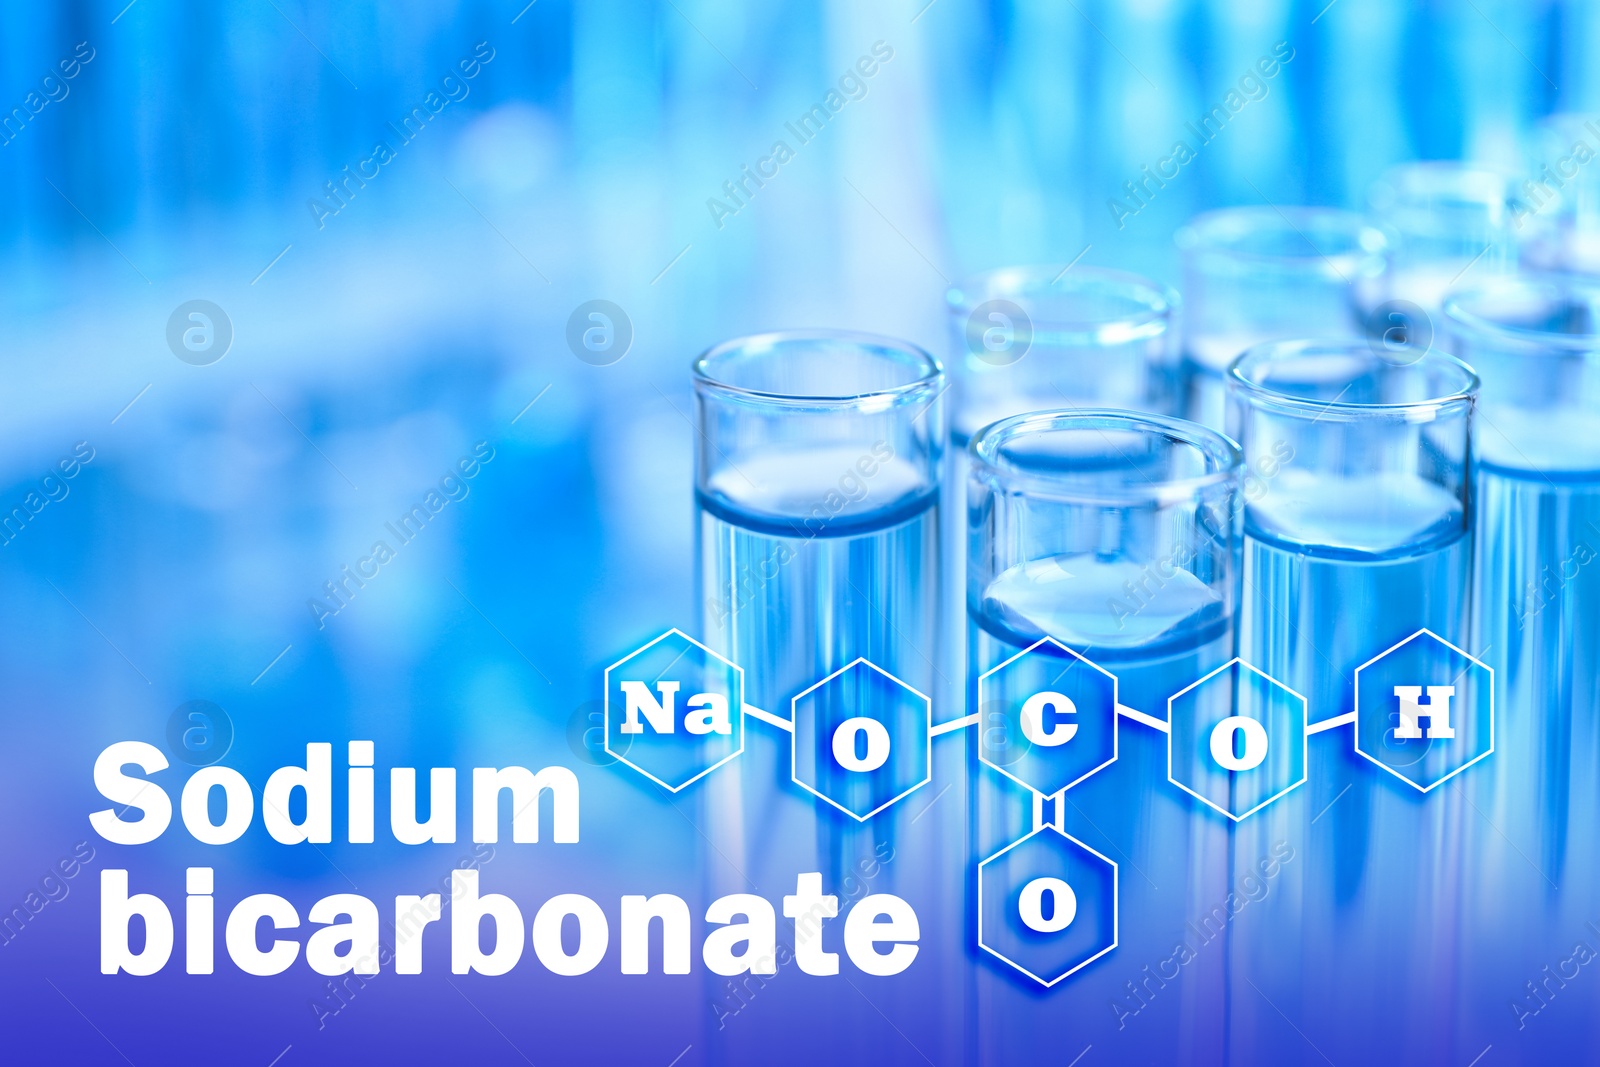 Image of Text Sodium bicarbonate with soda formula and test tubes on background